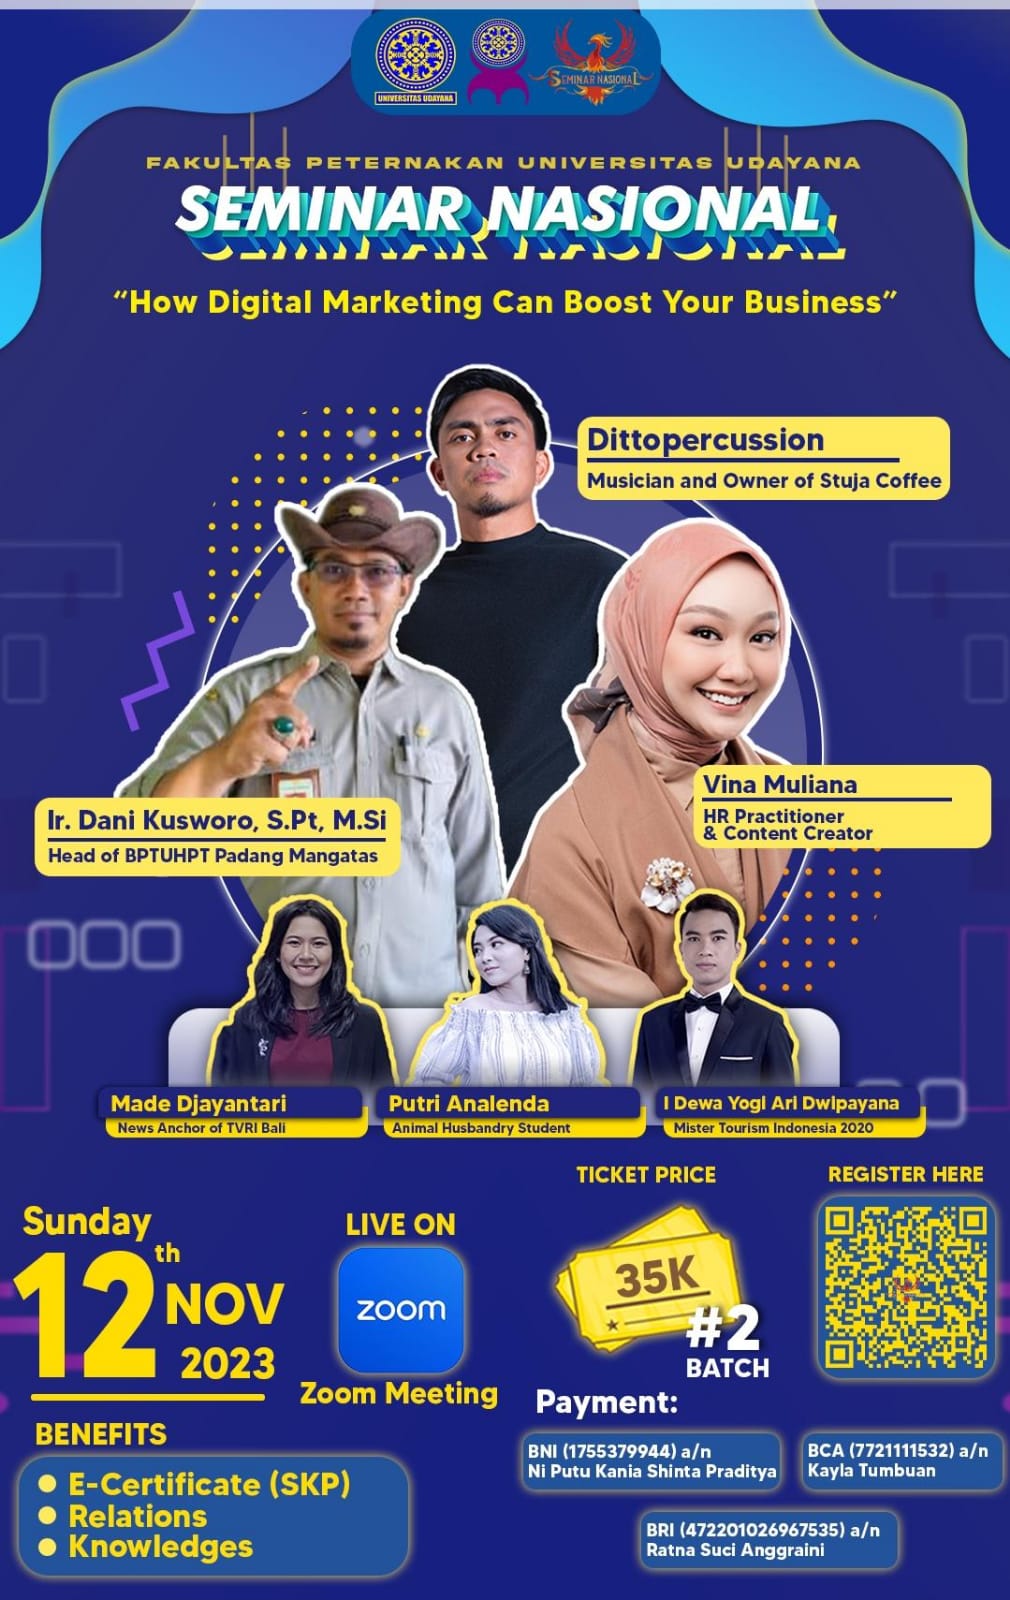 BEM-KM Fapet Unud Holds National Seminar, Increasing Business Through Digital Marketing